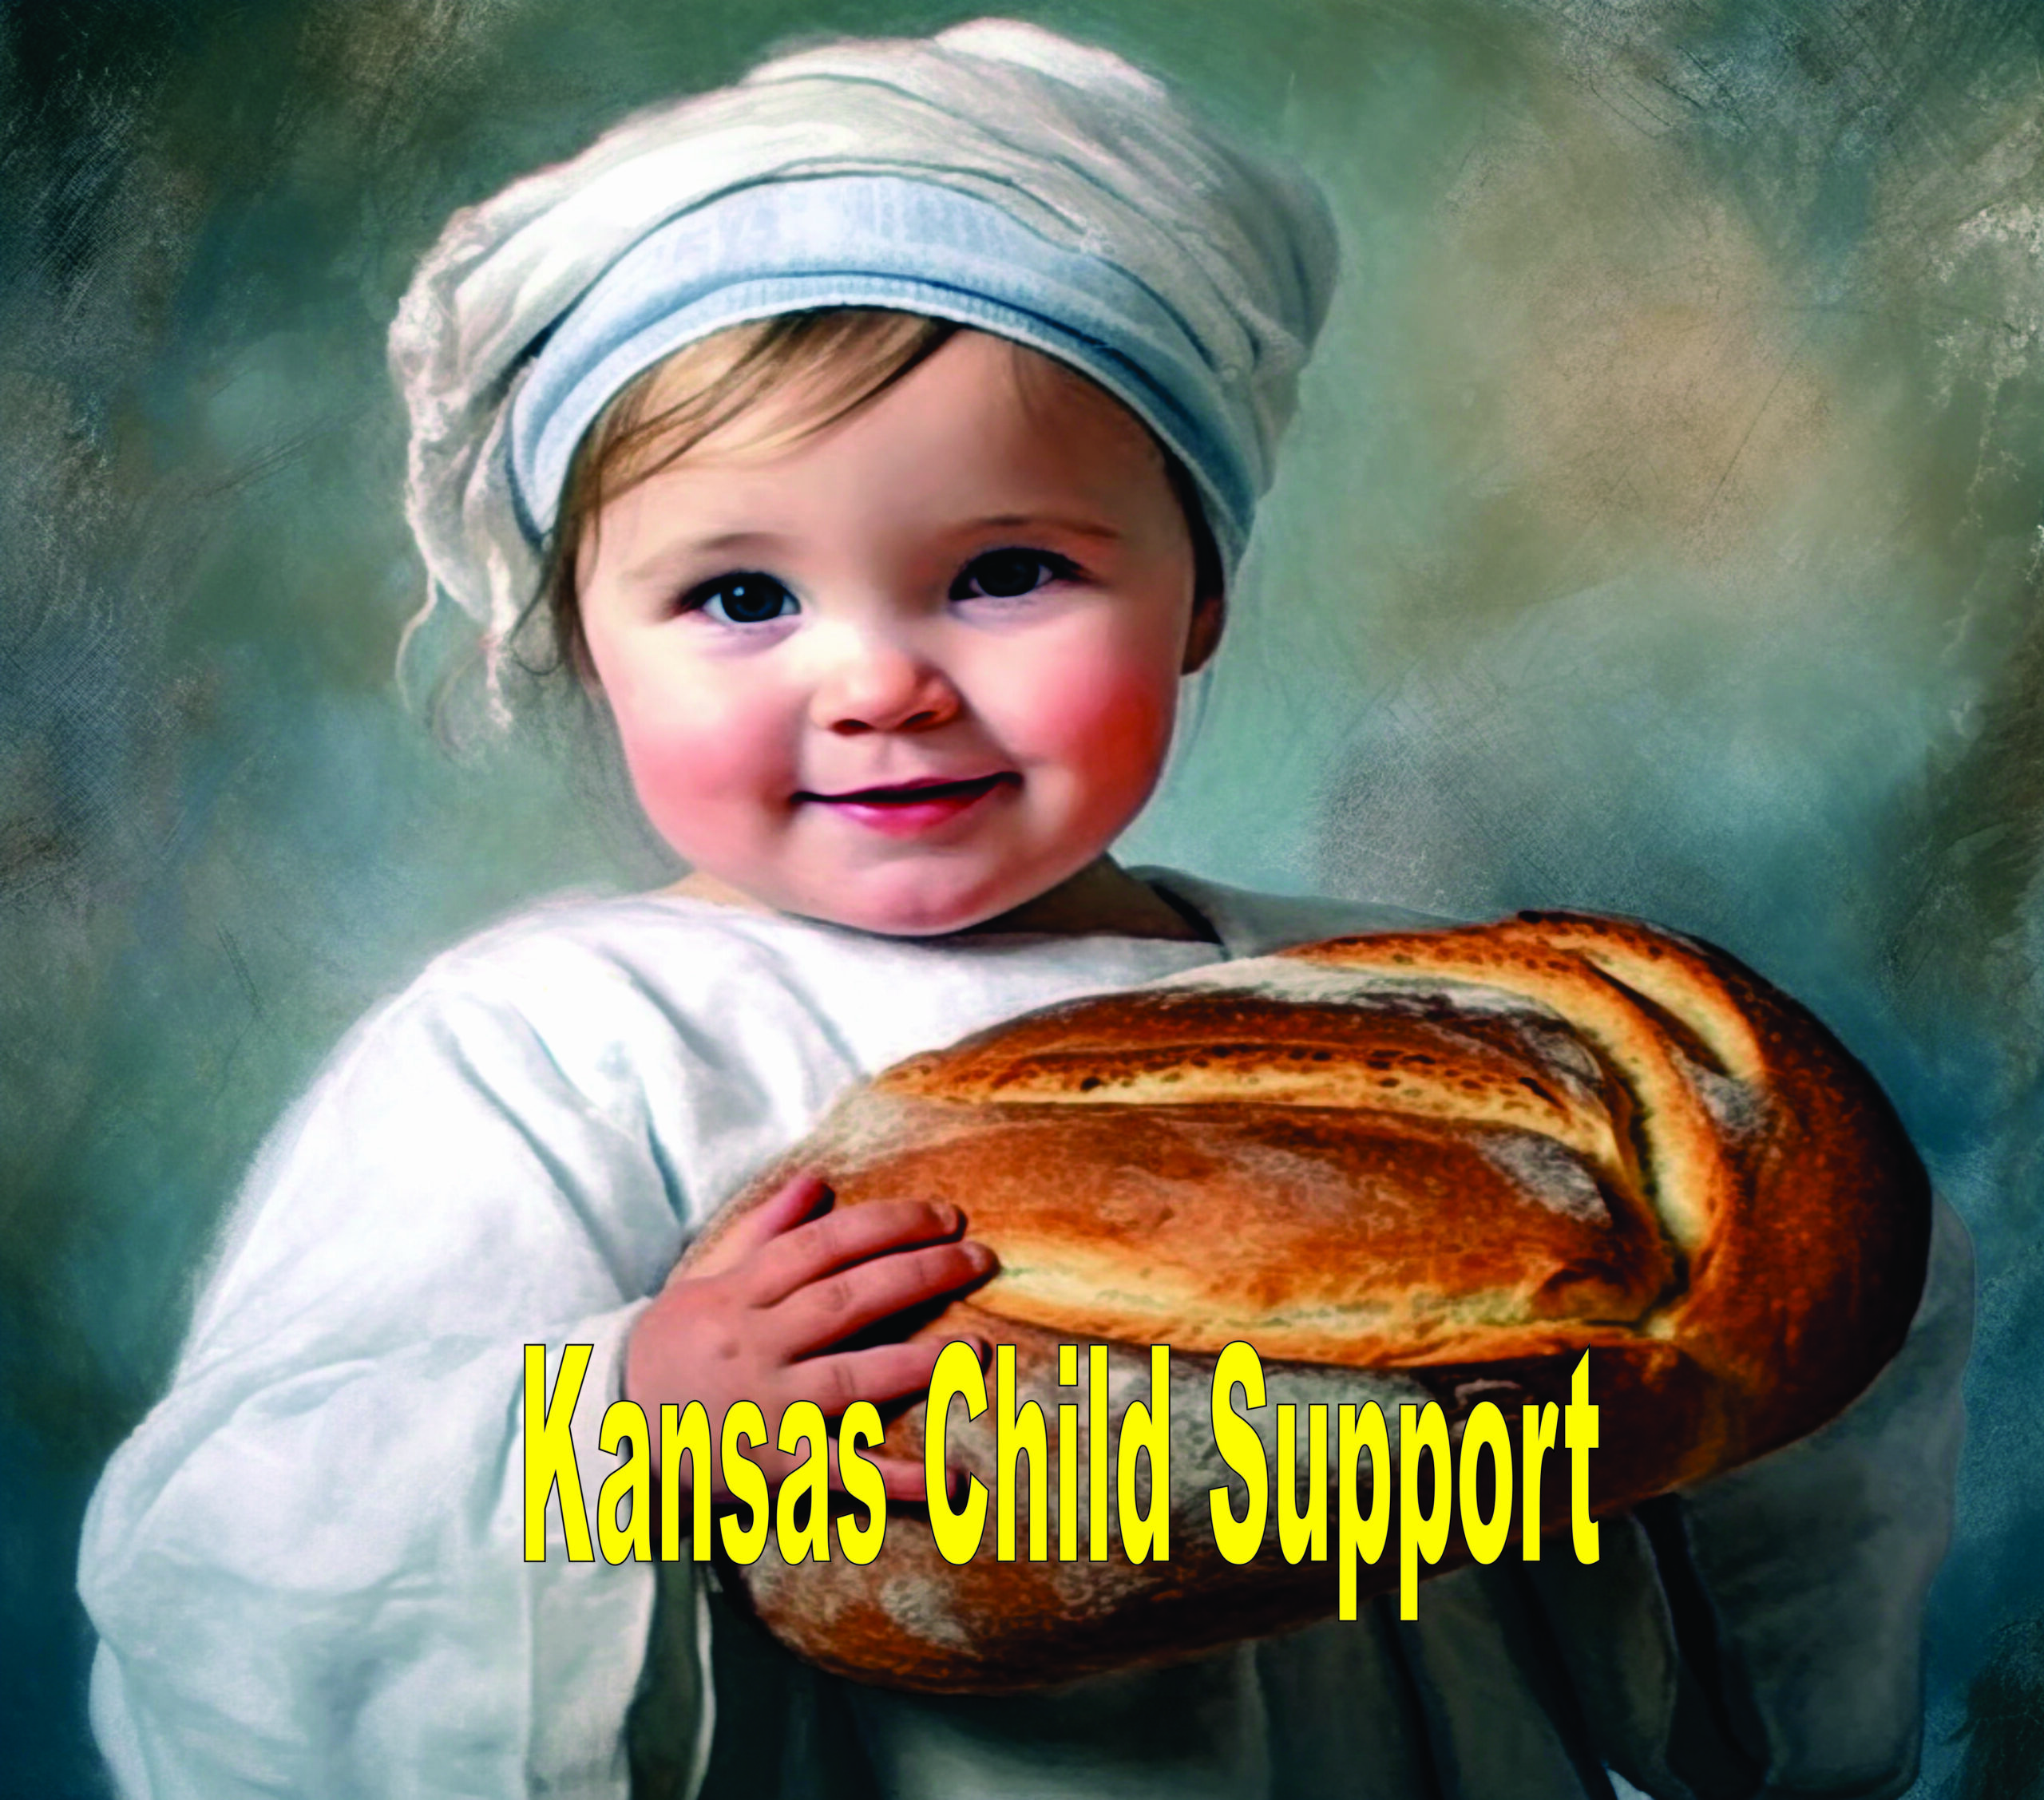 Kansas Child Support